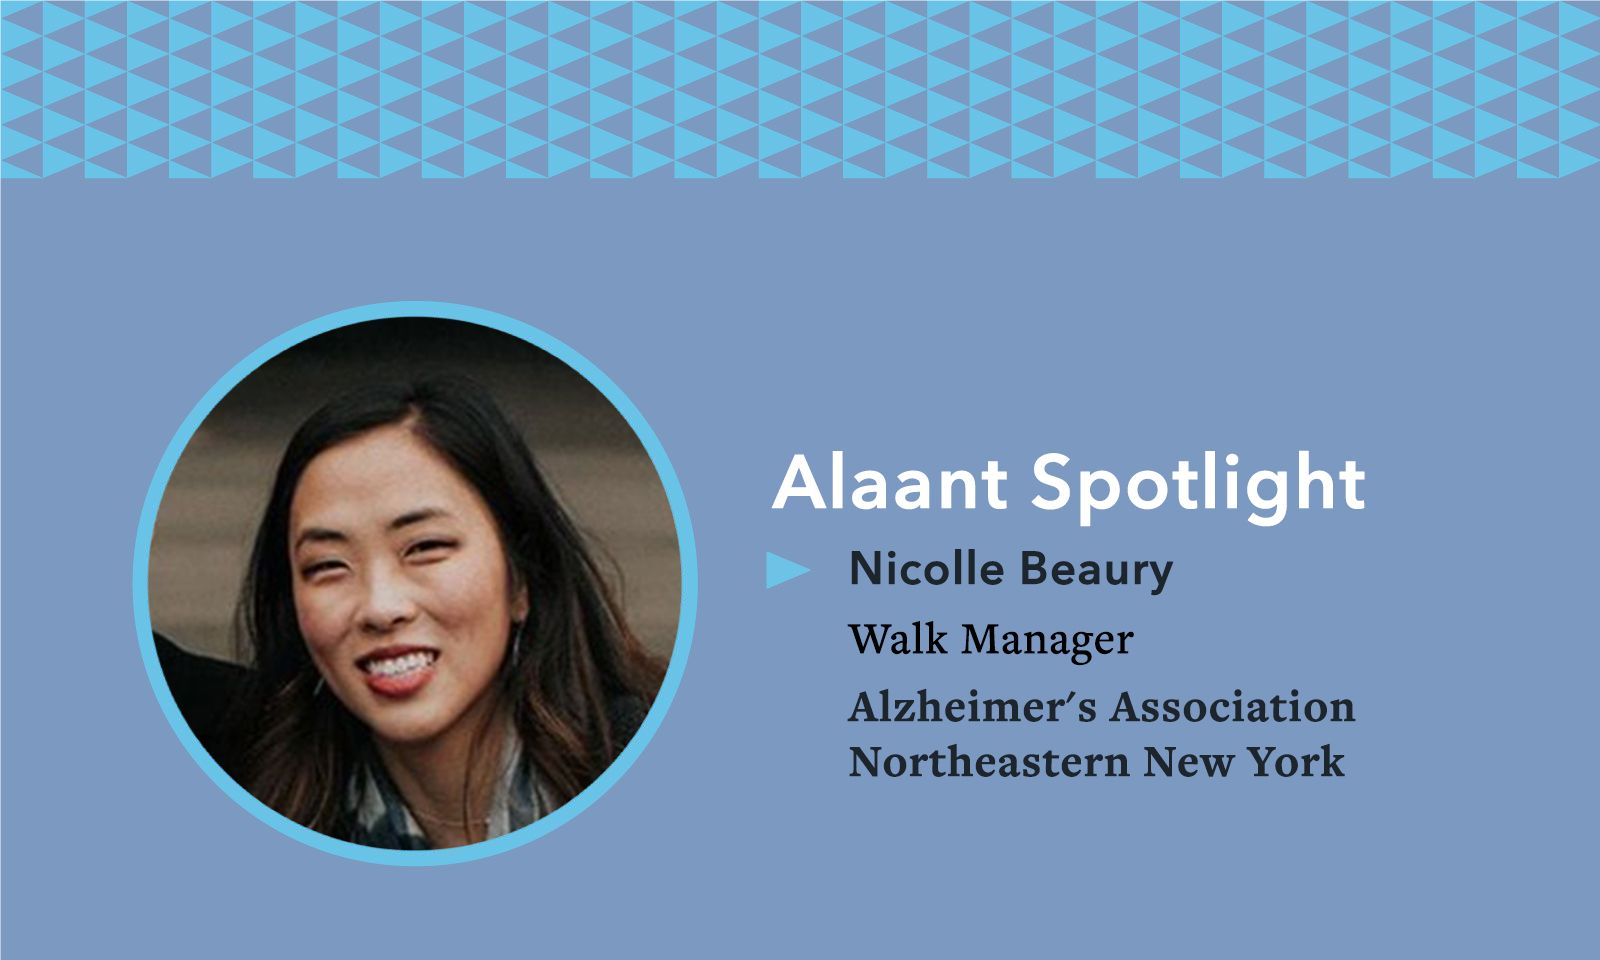 Alaant Spotlight Nicolle Beaury Walk Manager Alzheimer's Association Northeastern New York 